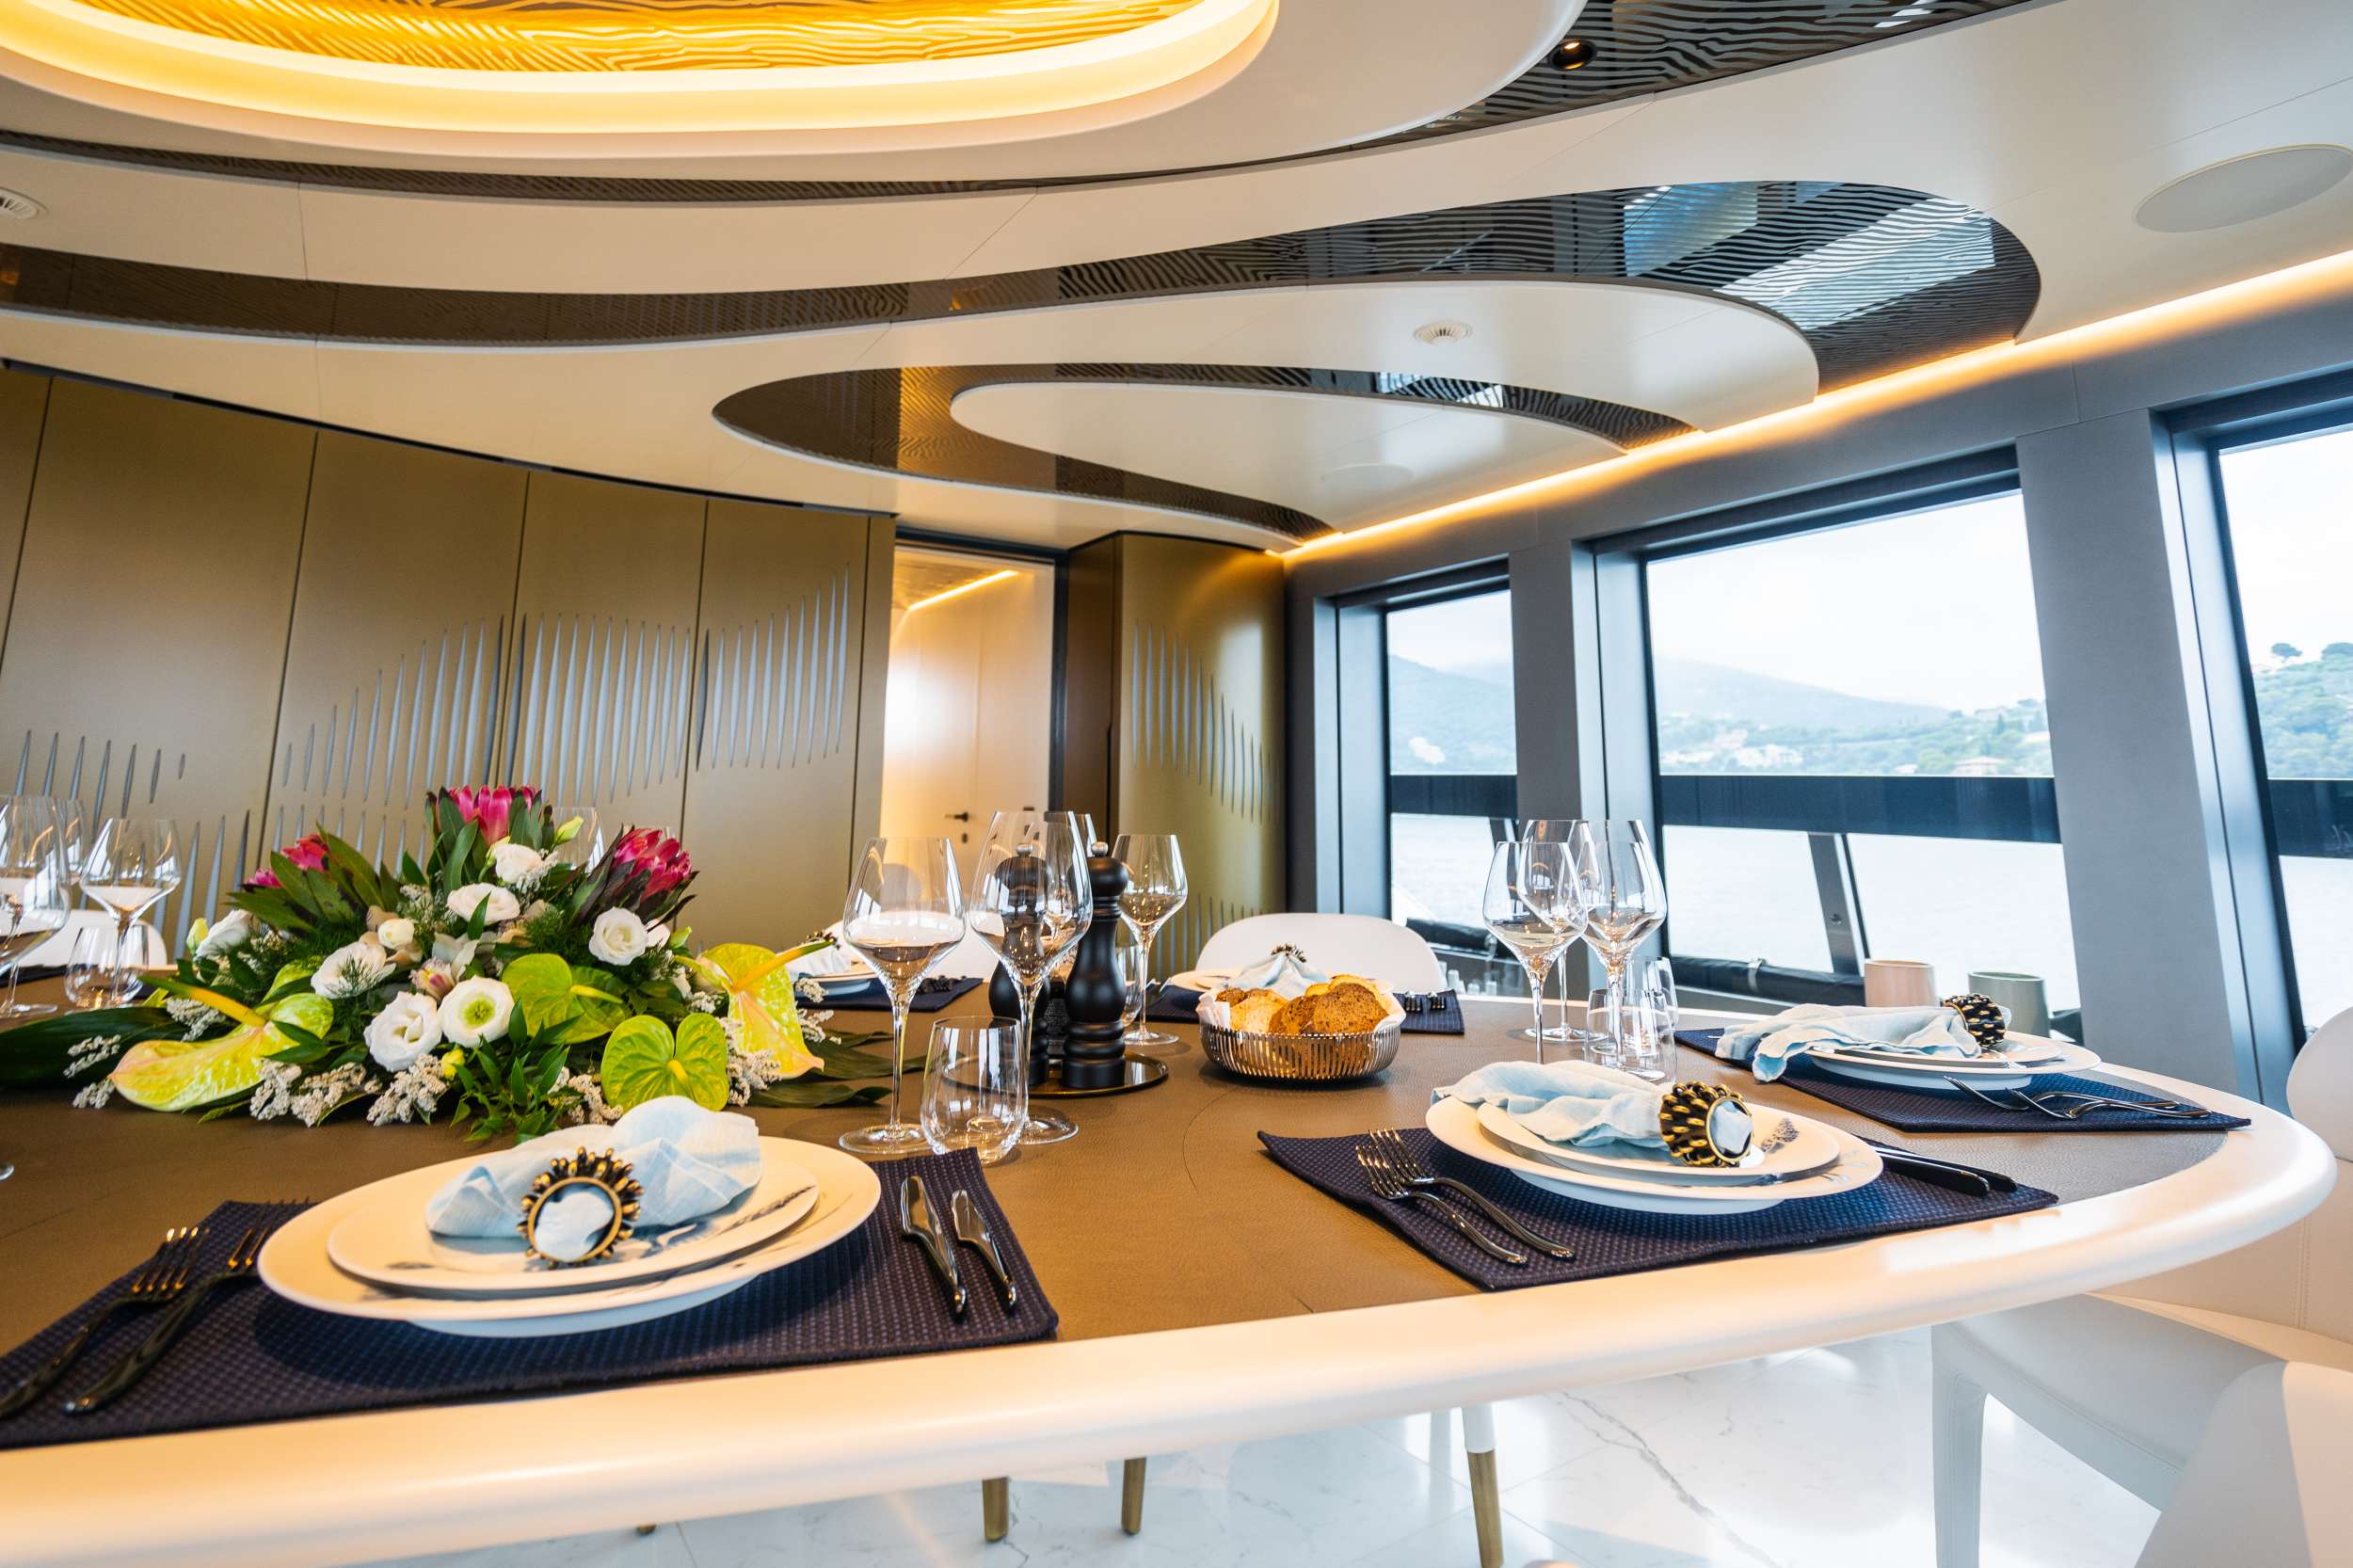 Pandion Pearl - Yacht Charter Spain & Boat hire in Riviera, Cors, Sard, Italy, Spain, Turkey, Croatia, Greece 3